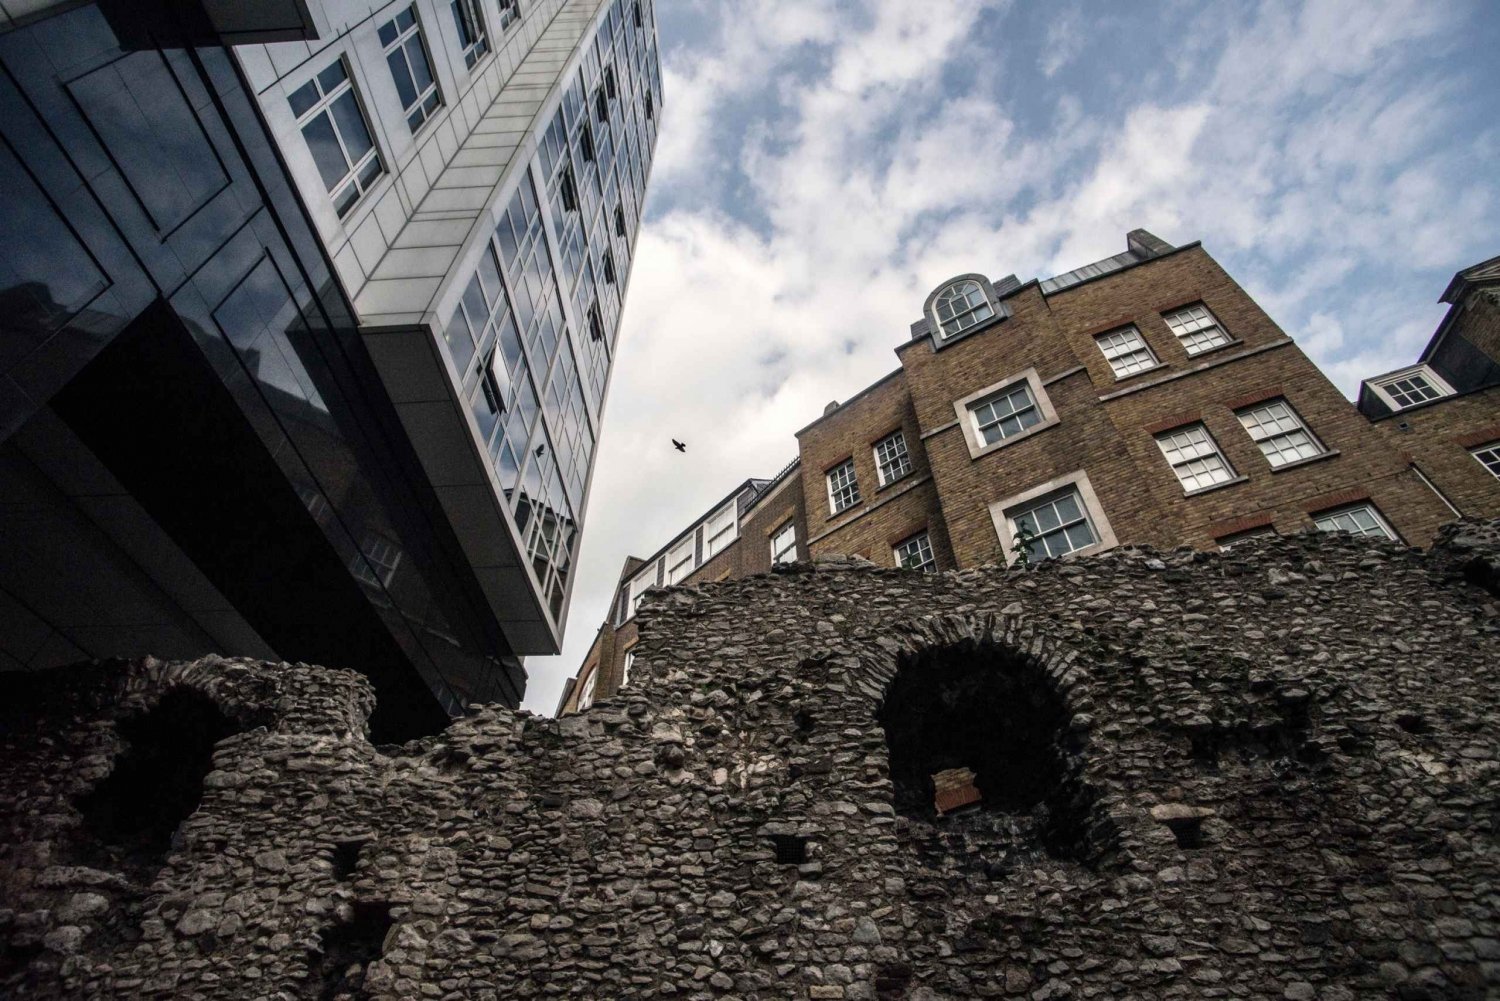 London: Jack the Ripper Walking Tour